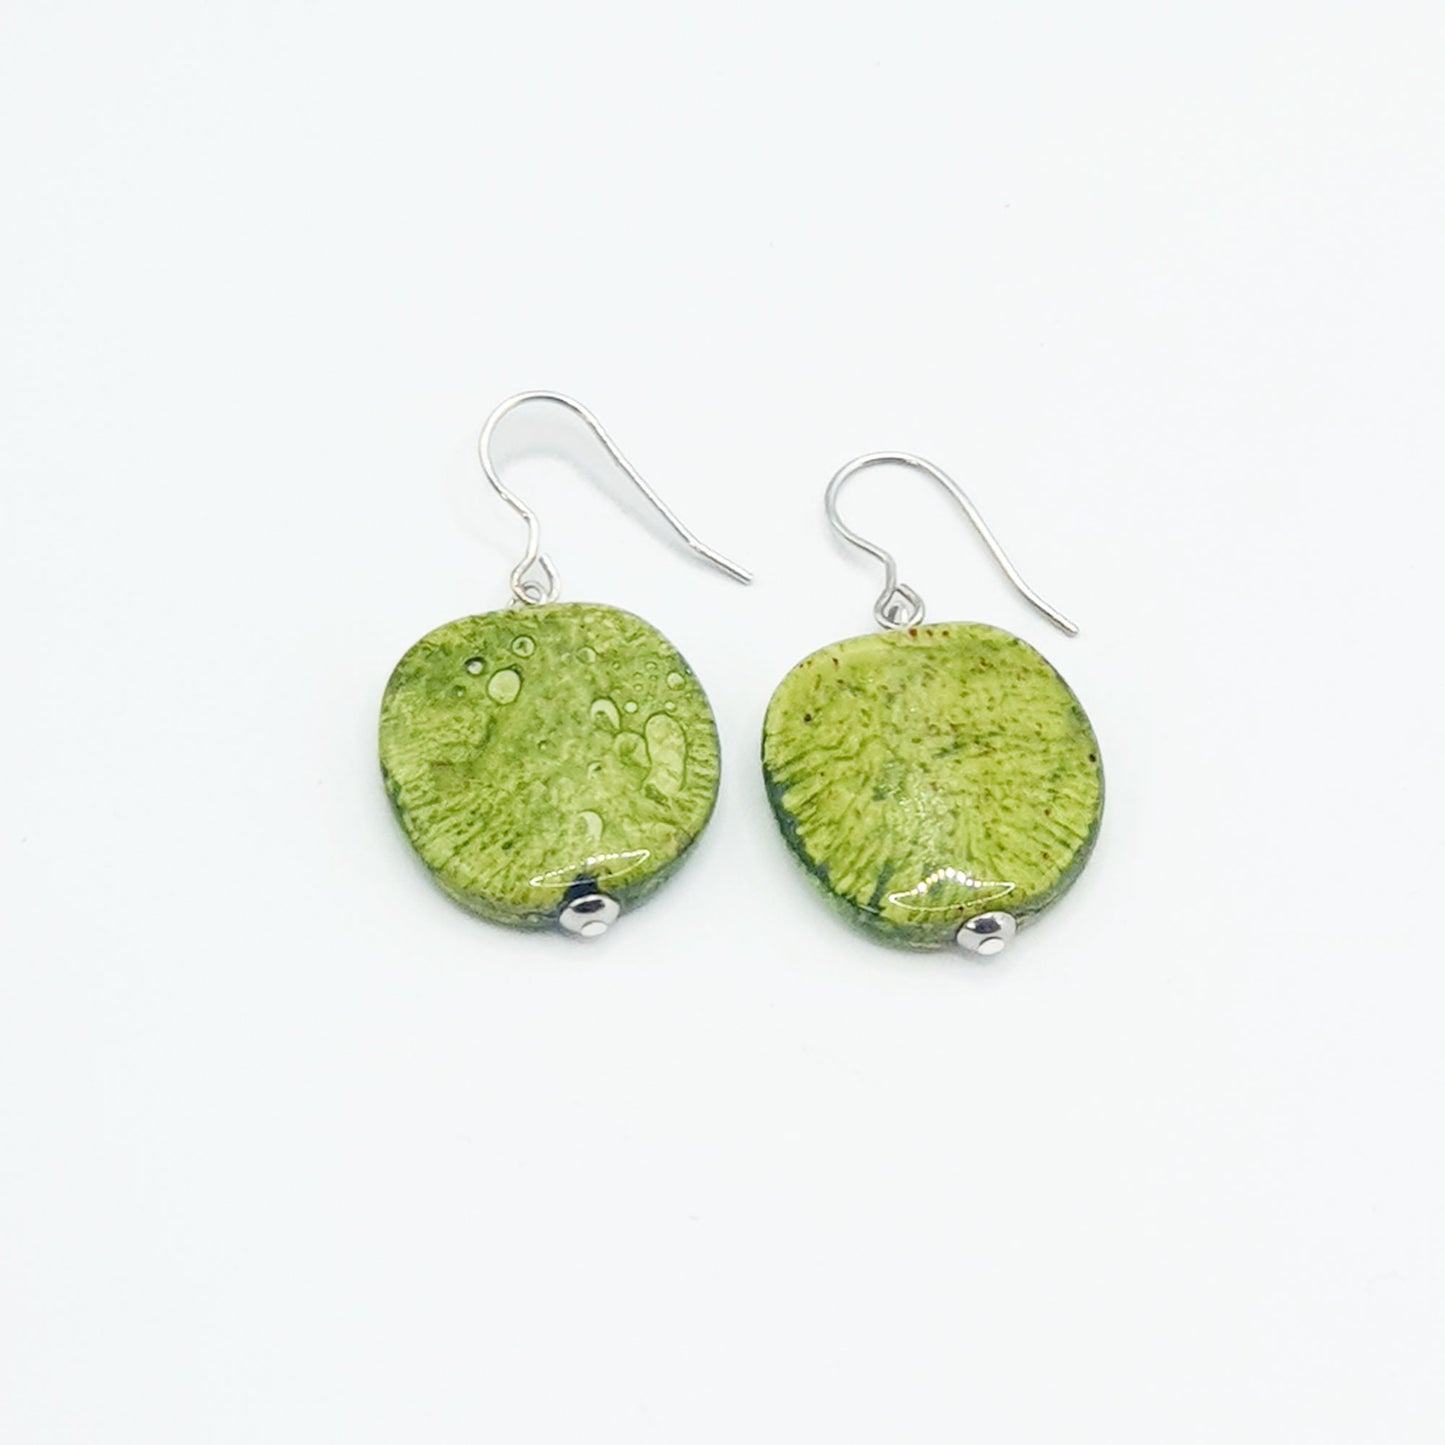 Resin pebble earrings in green